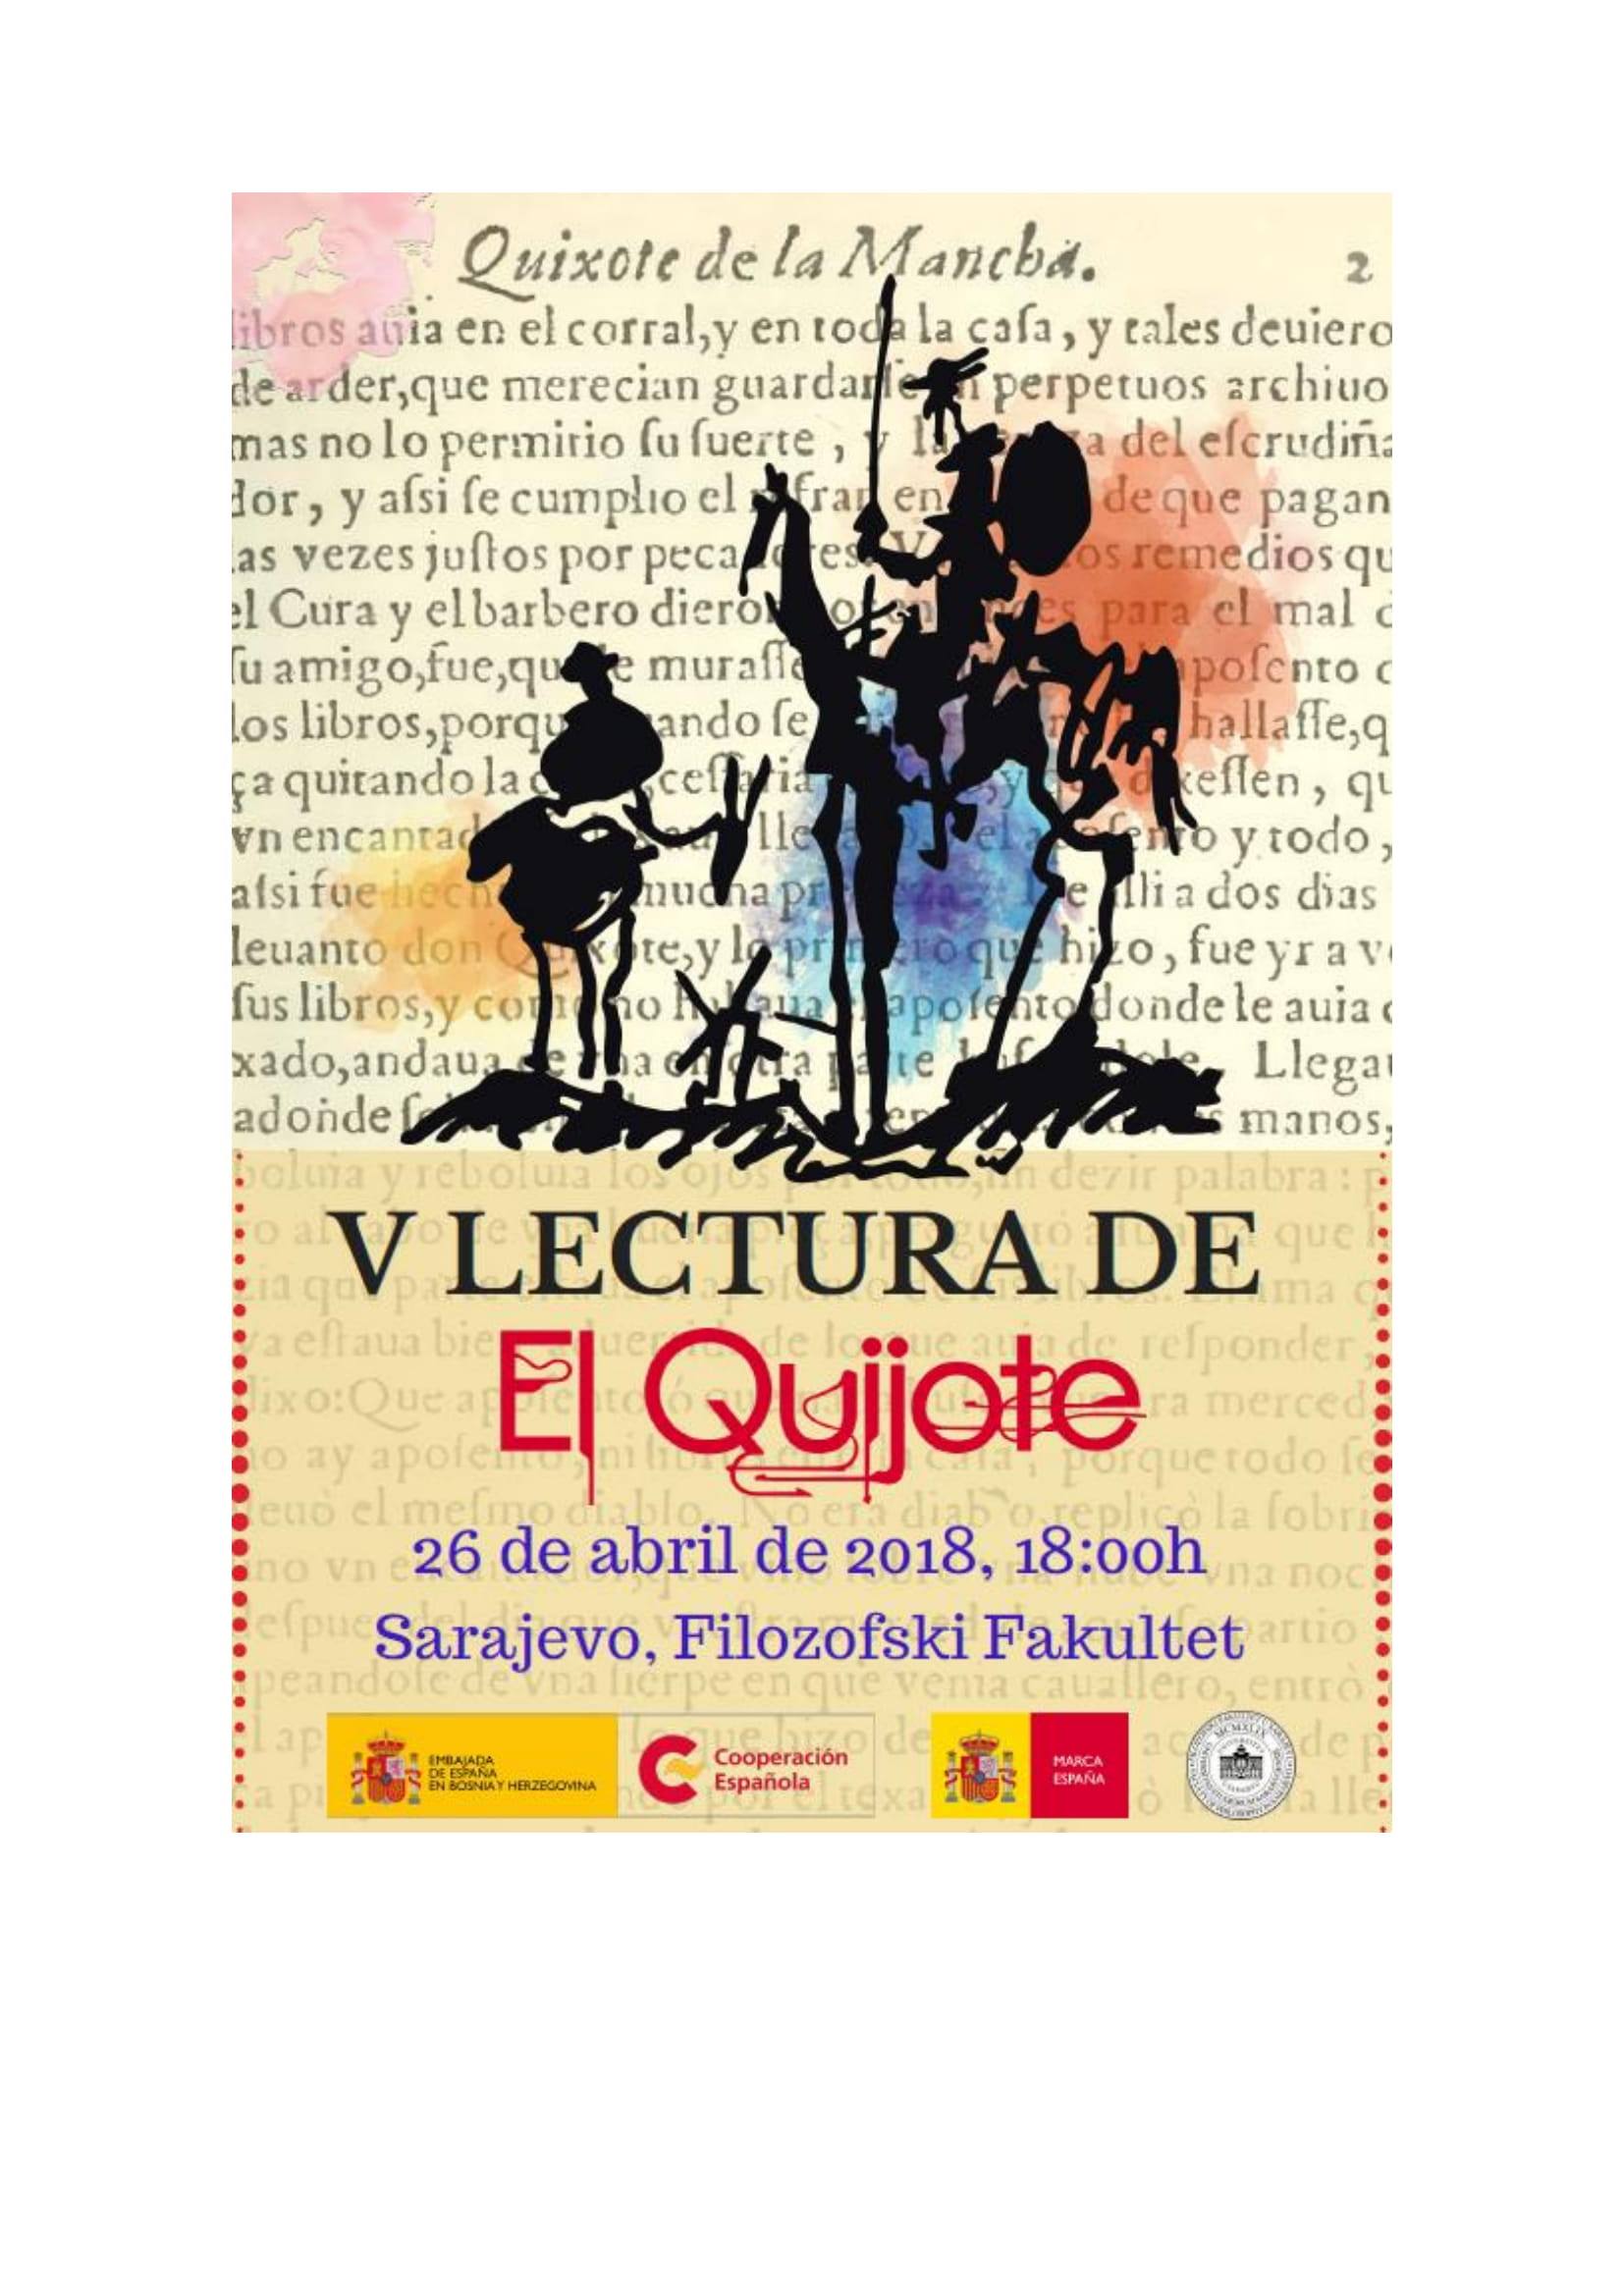  Lectura pública de El Quijote / Javno čitanje Don Kihota